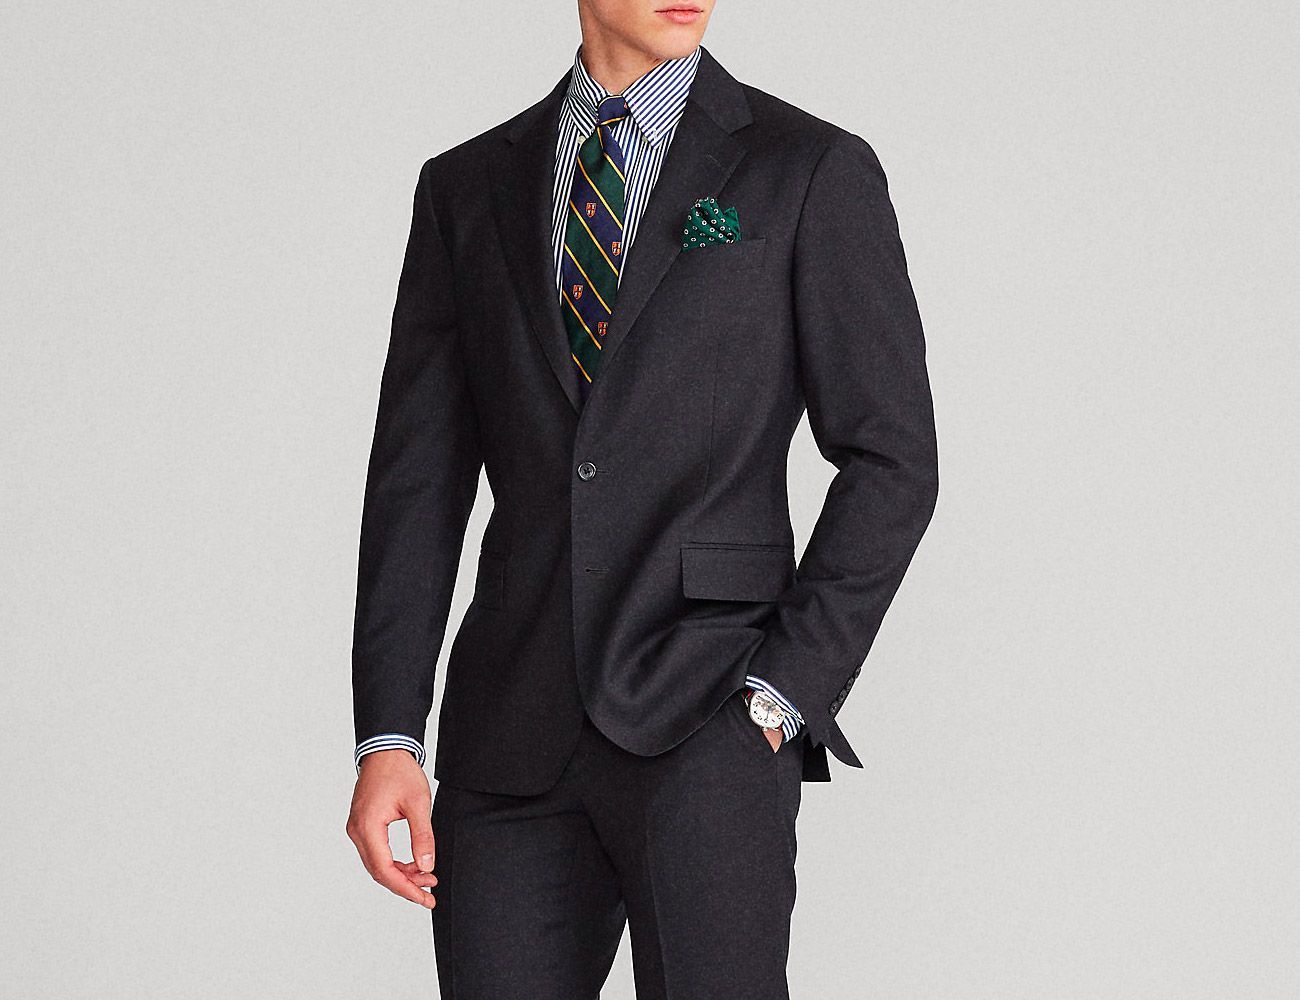 The Best Suits For Men Under $1,200